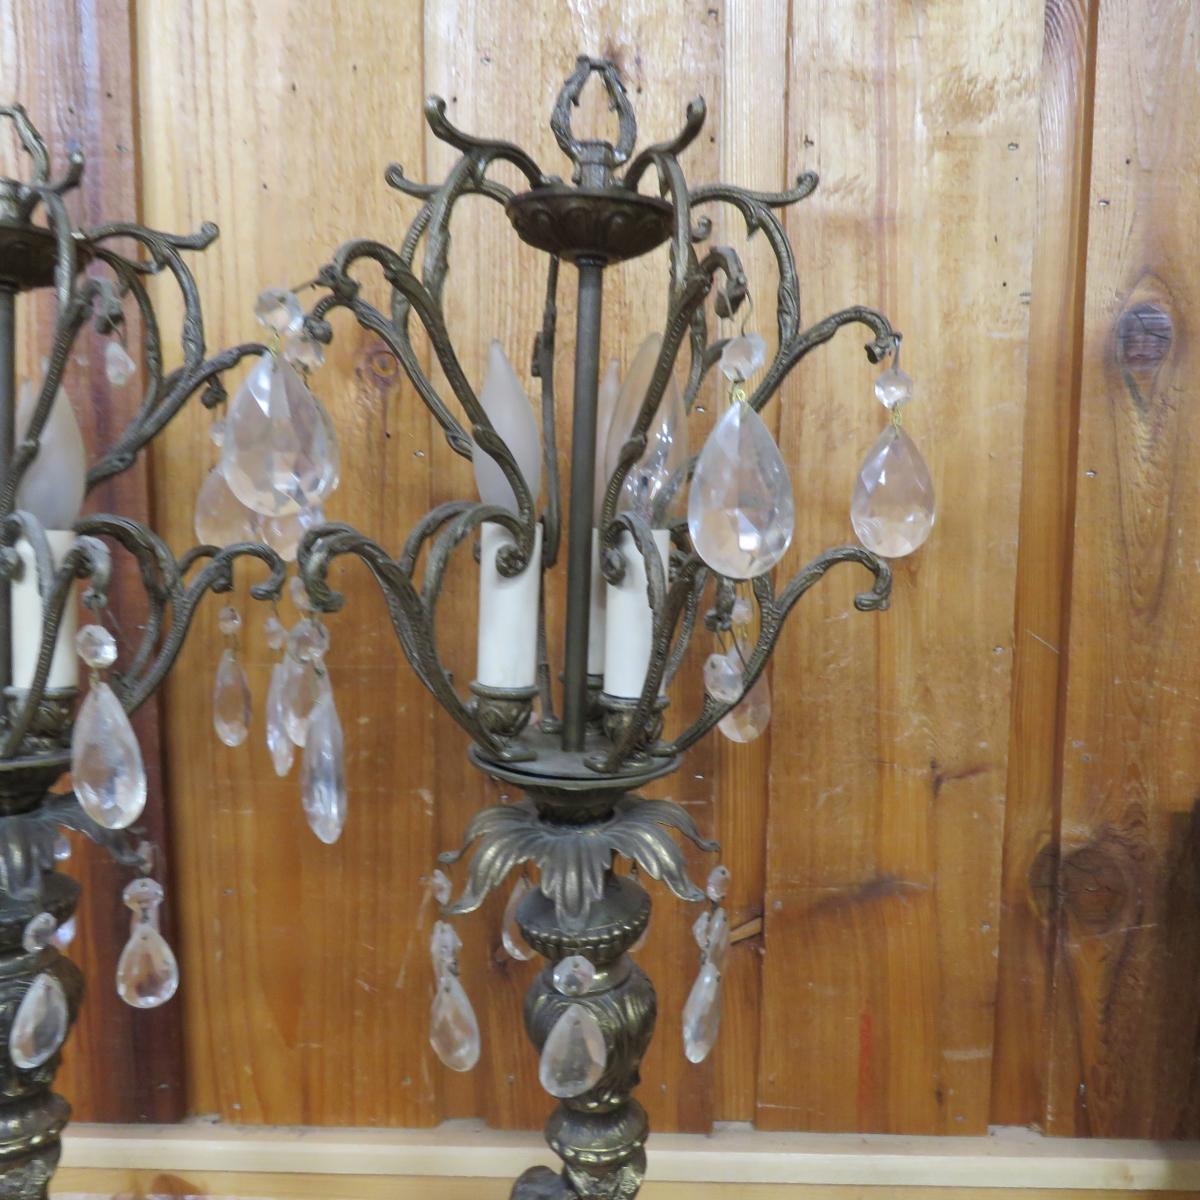 Pair of Brass Cherubian Chandelier Lamps